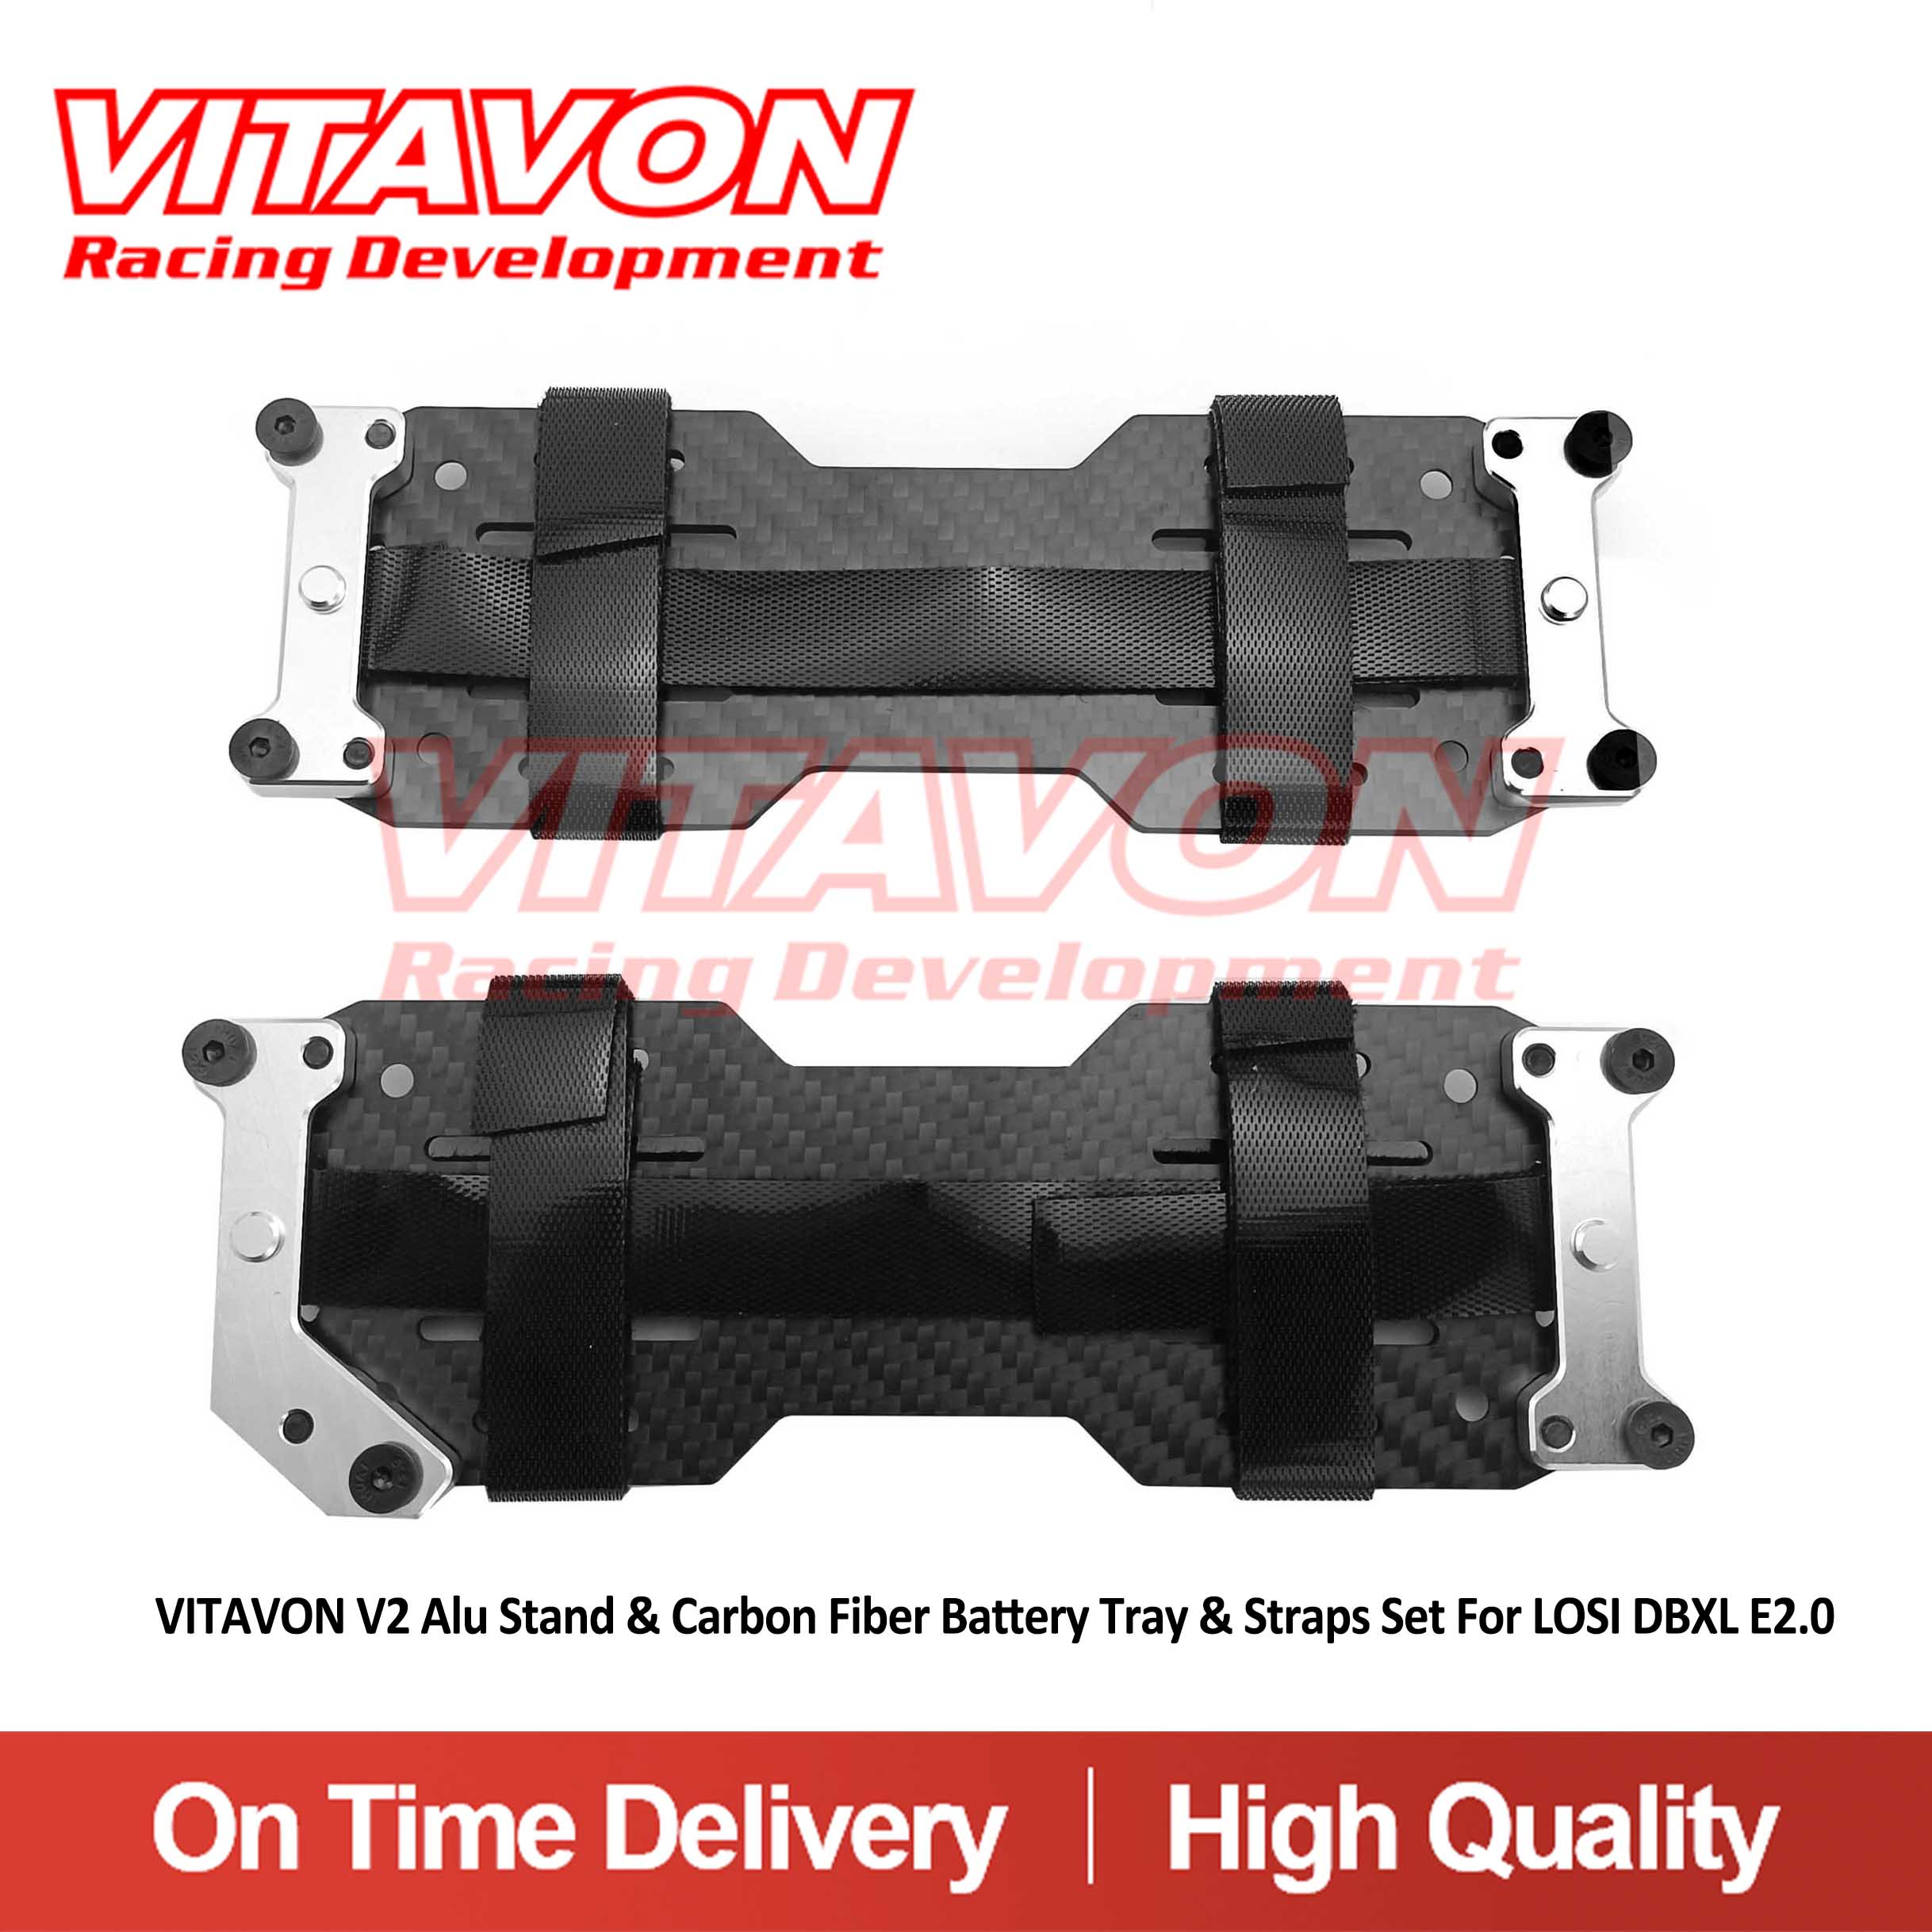 VITAVON V2 Alu stand & Carbon Fiber Battery Tray & Straps Set for LOSI DBXL E2.0